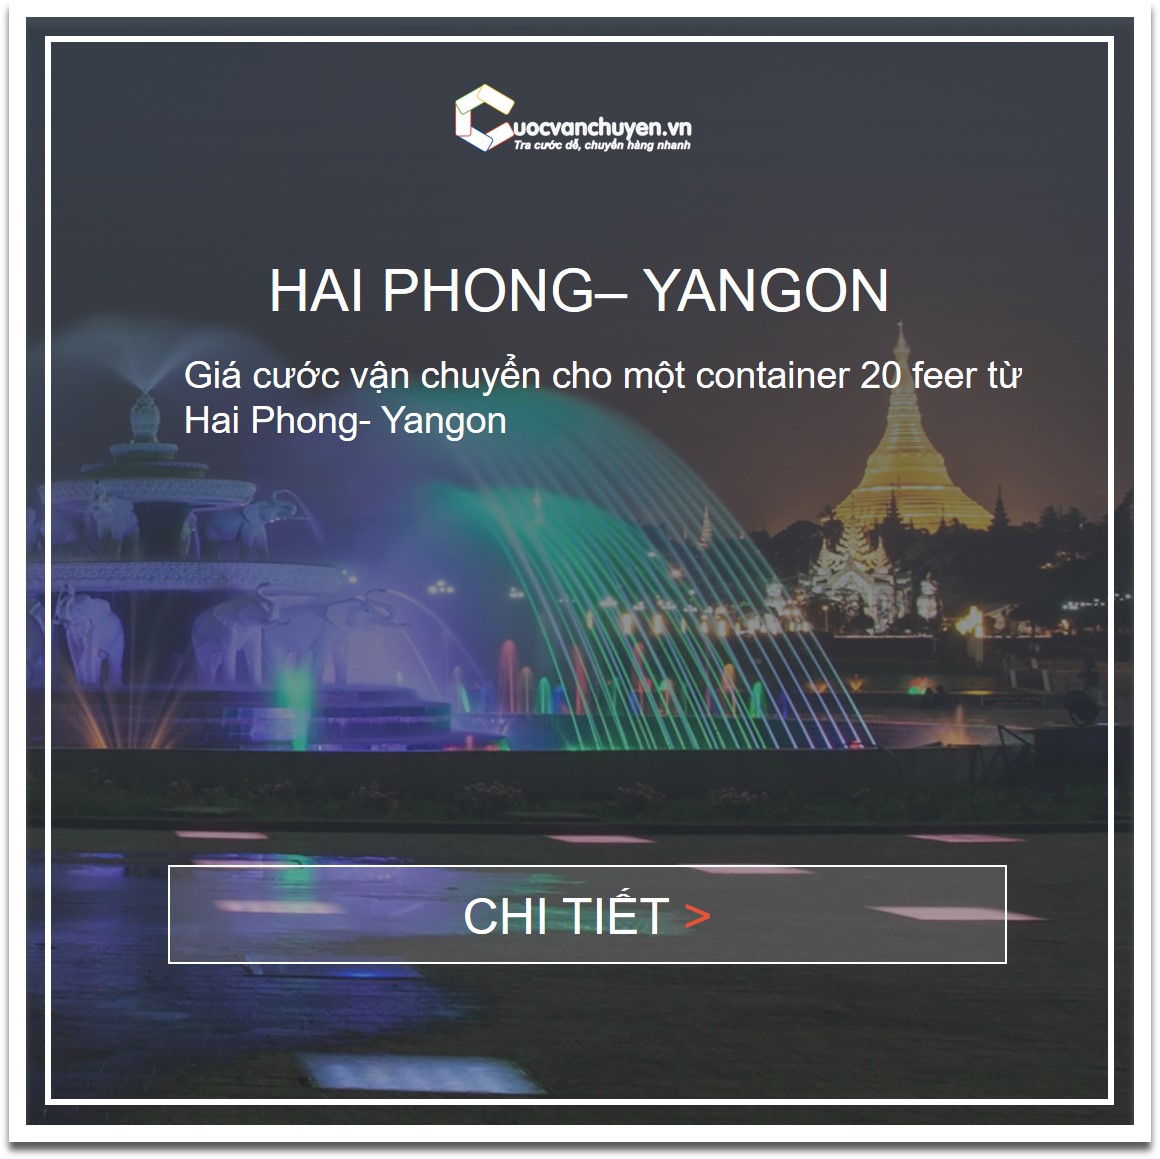 van-chuyen-hang-hoa-tu-hai-phong-di-Yangon_cuocvanchuyen_vn.jpg